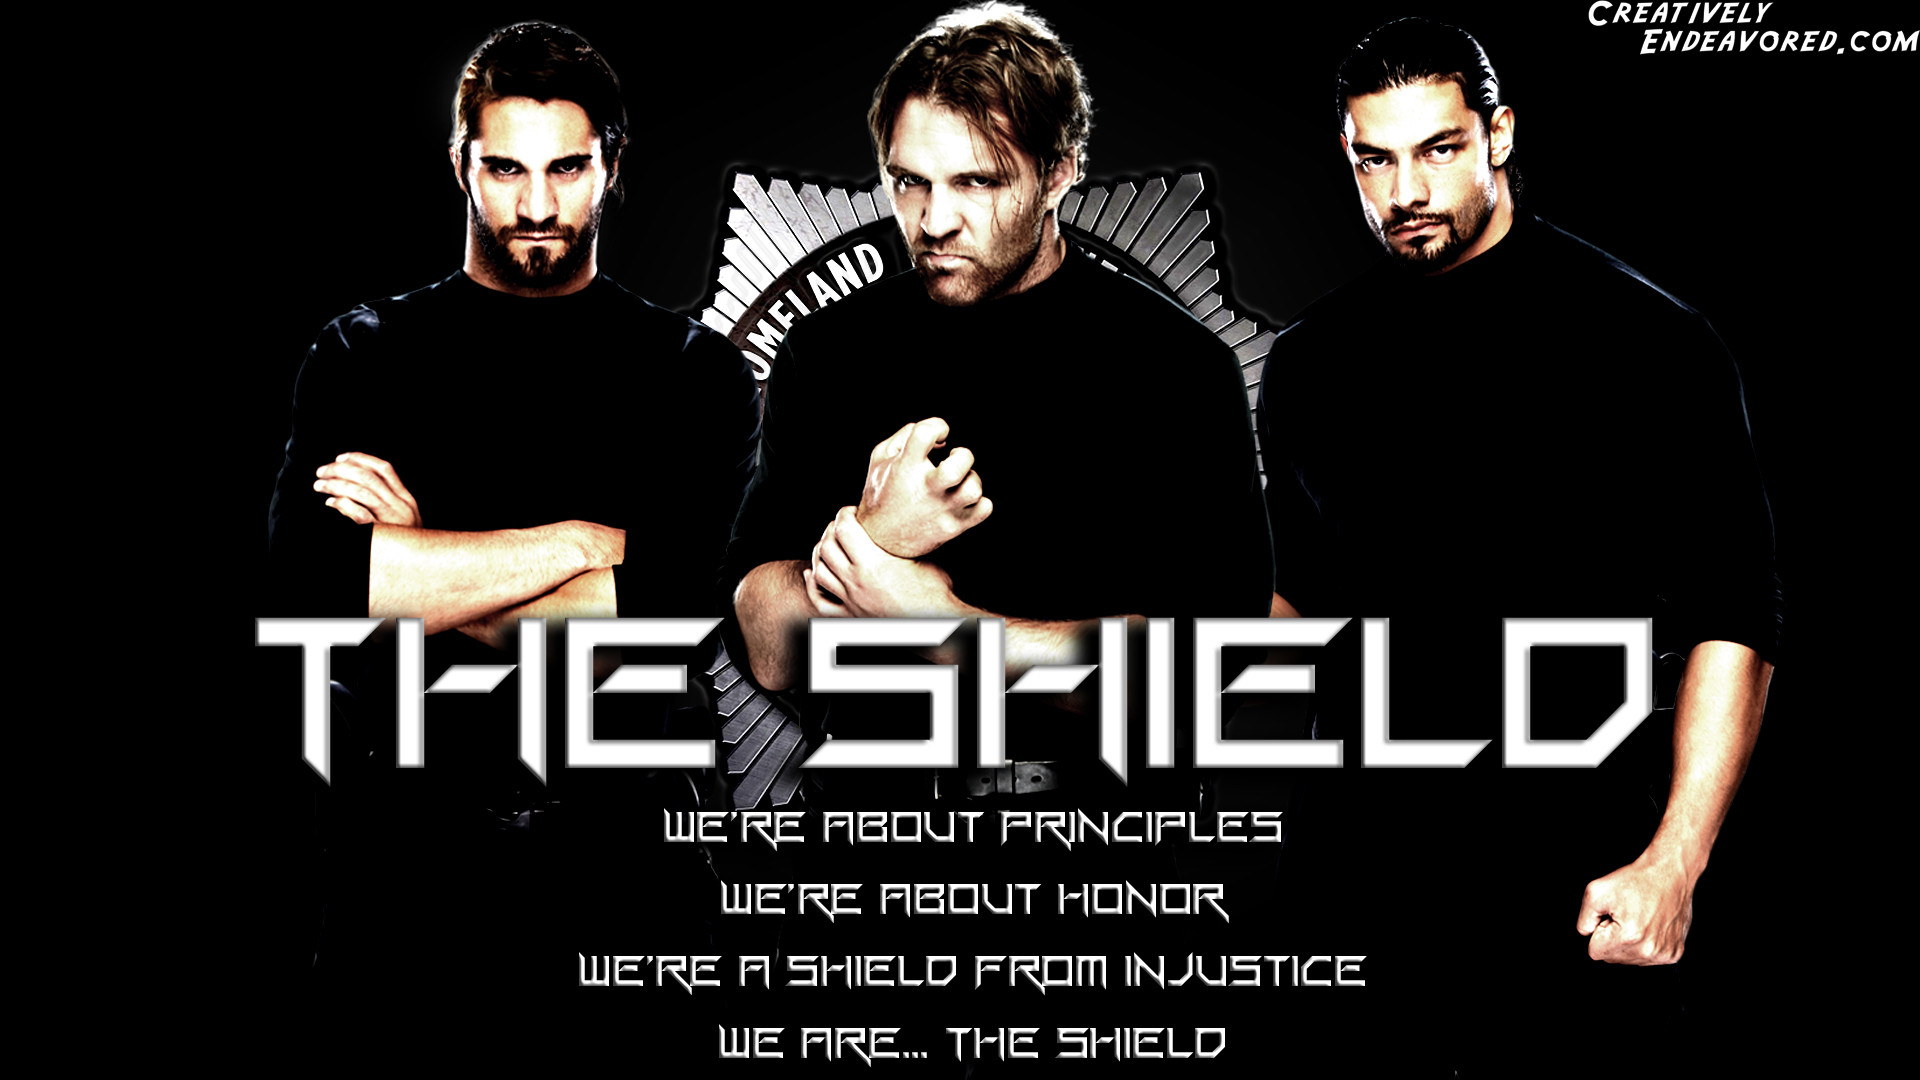 1920x1080 Wallpaper Wednesday: The Shield Wallpaper v2 (Dean Ambrose, Seth Rollins &  Roman Reigns)